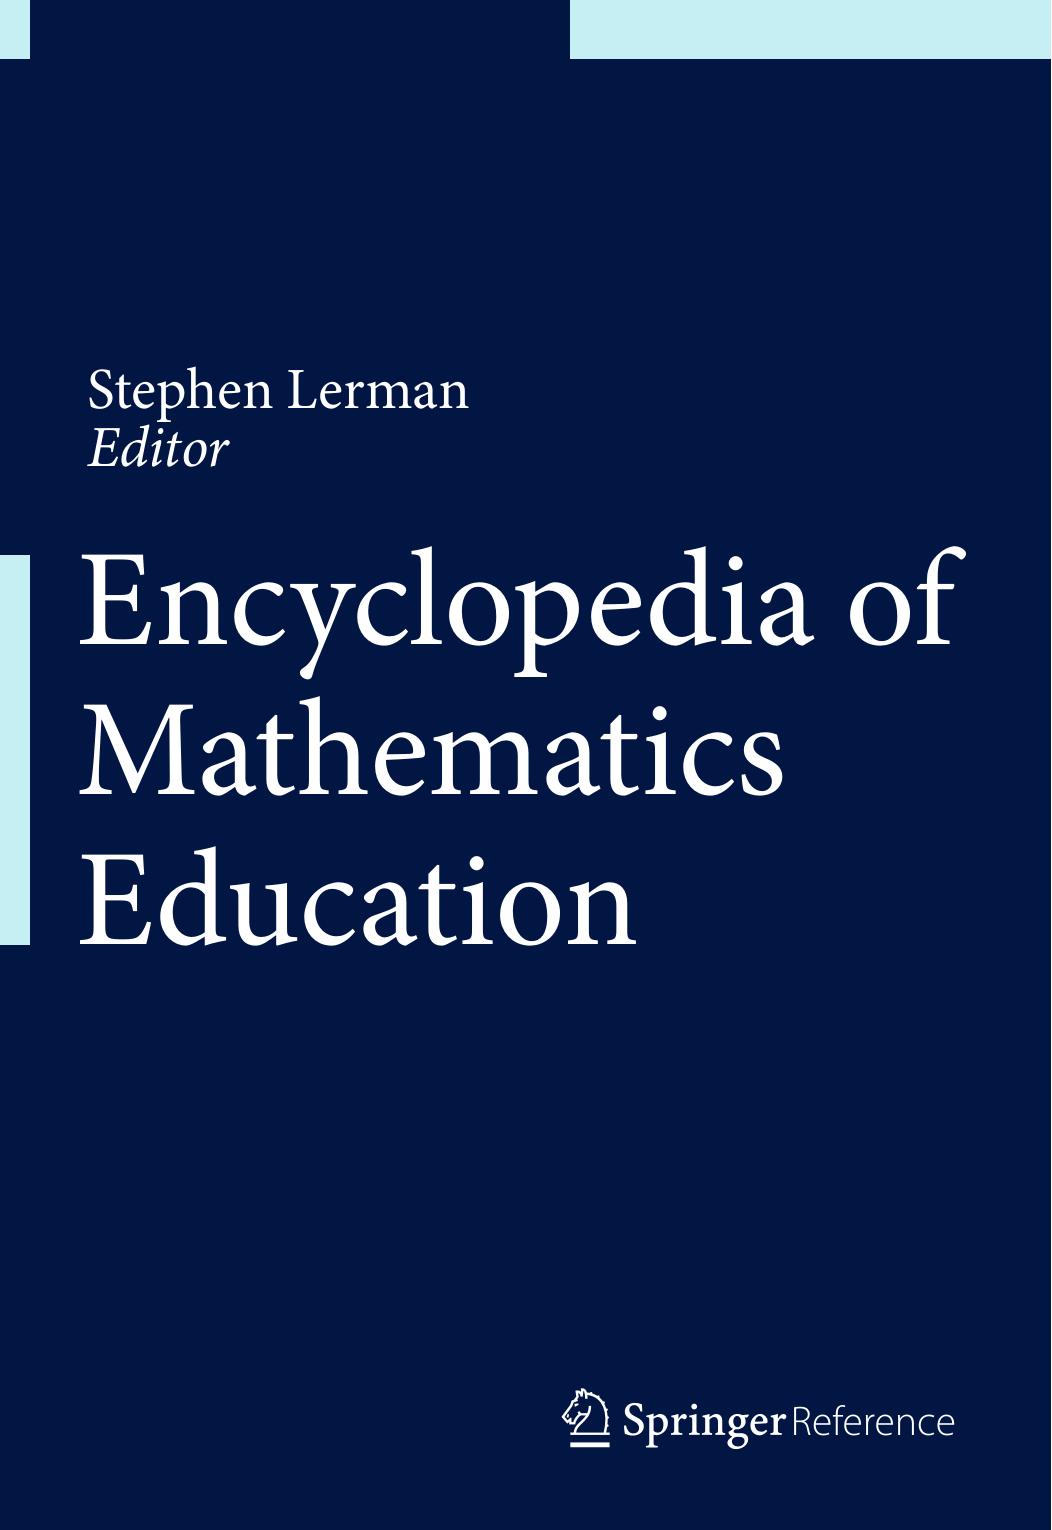 Encyclopedia of Mathematics Education ( PDFDrive.com )